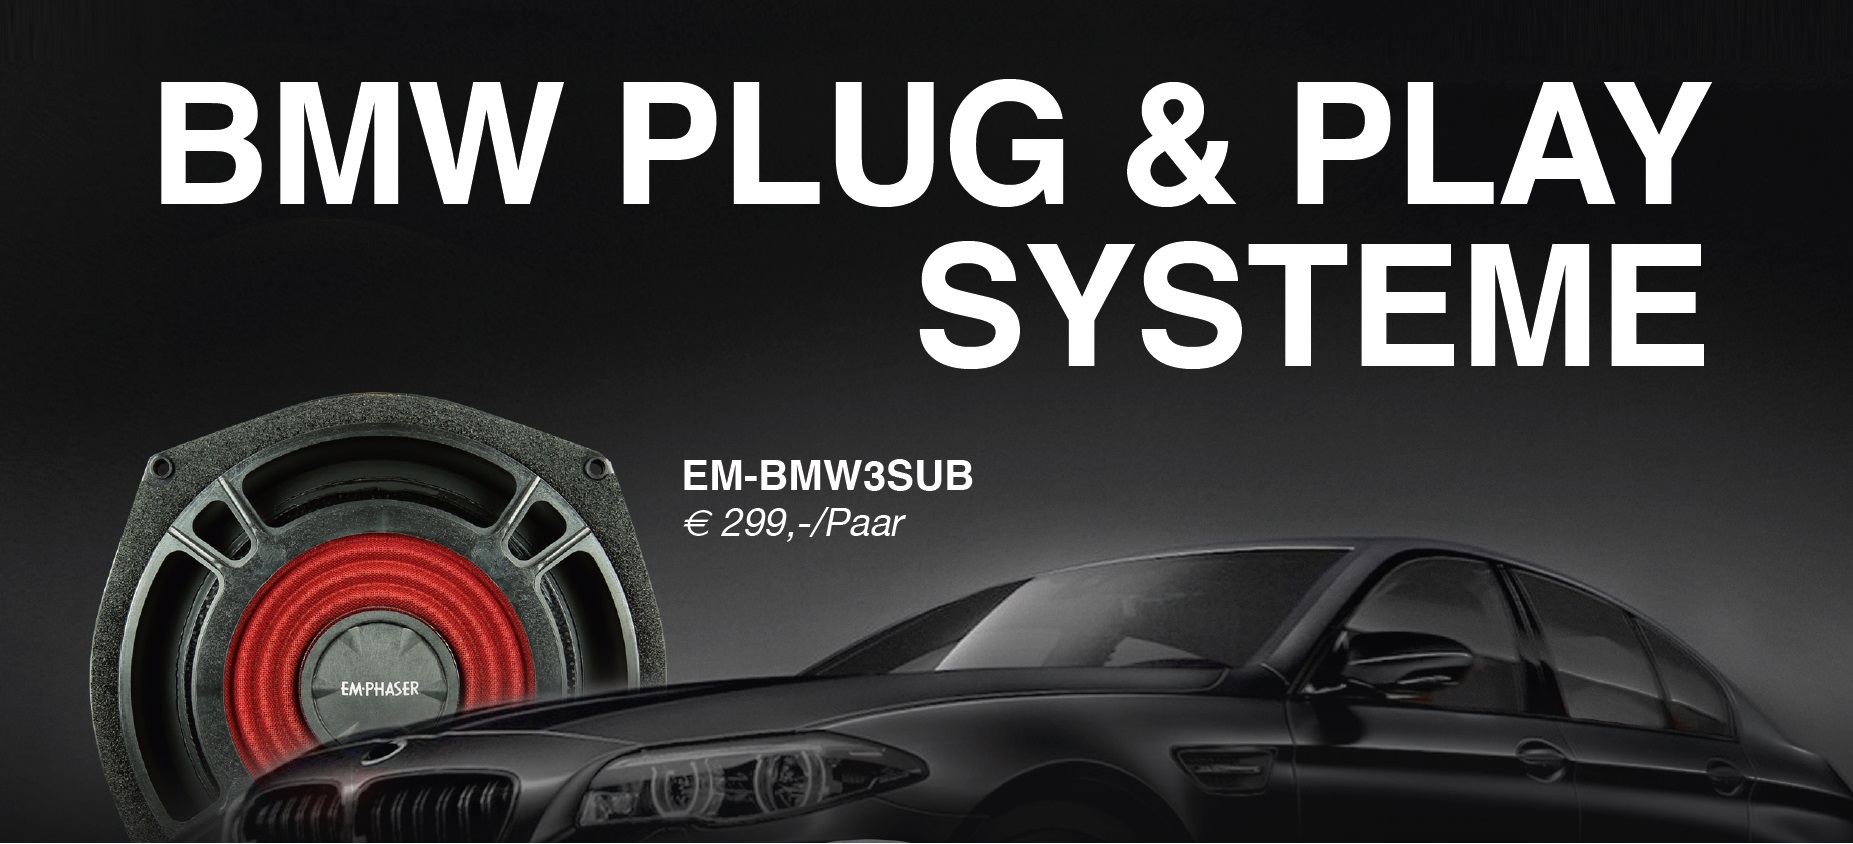 EMPHASER BMW3SUB 20cm Plug & Play Subwoofer für BMW Fahrzeuge 2 Stück BMW: E6x / E7x / E8x / E9x / F0x / F2x / F3x / F4x / F5x / F8x / G11 / G12 / G30 / G31 / G38 / I8